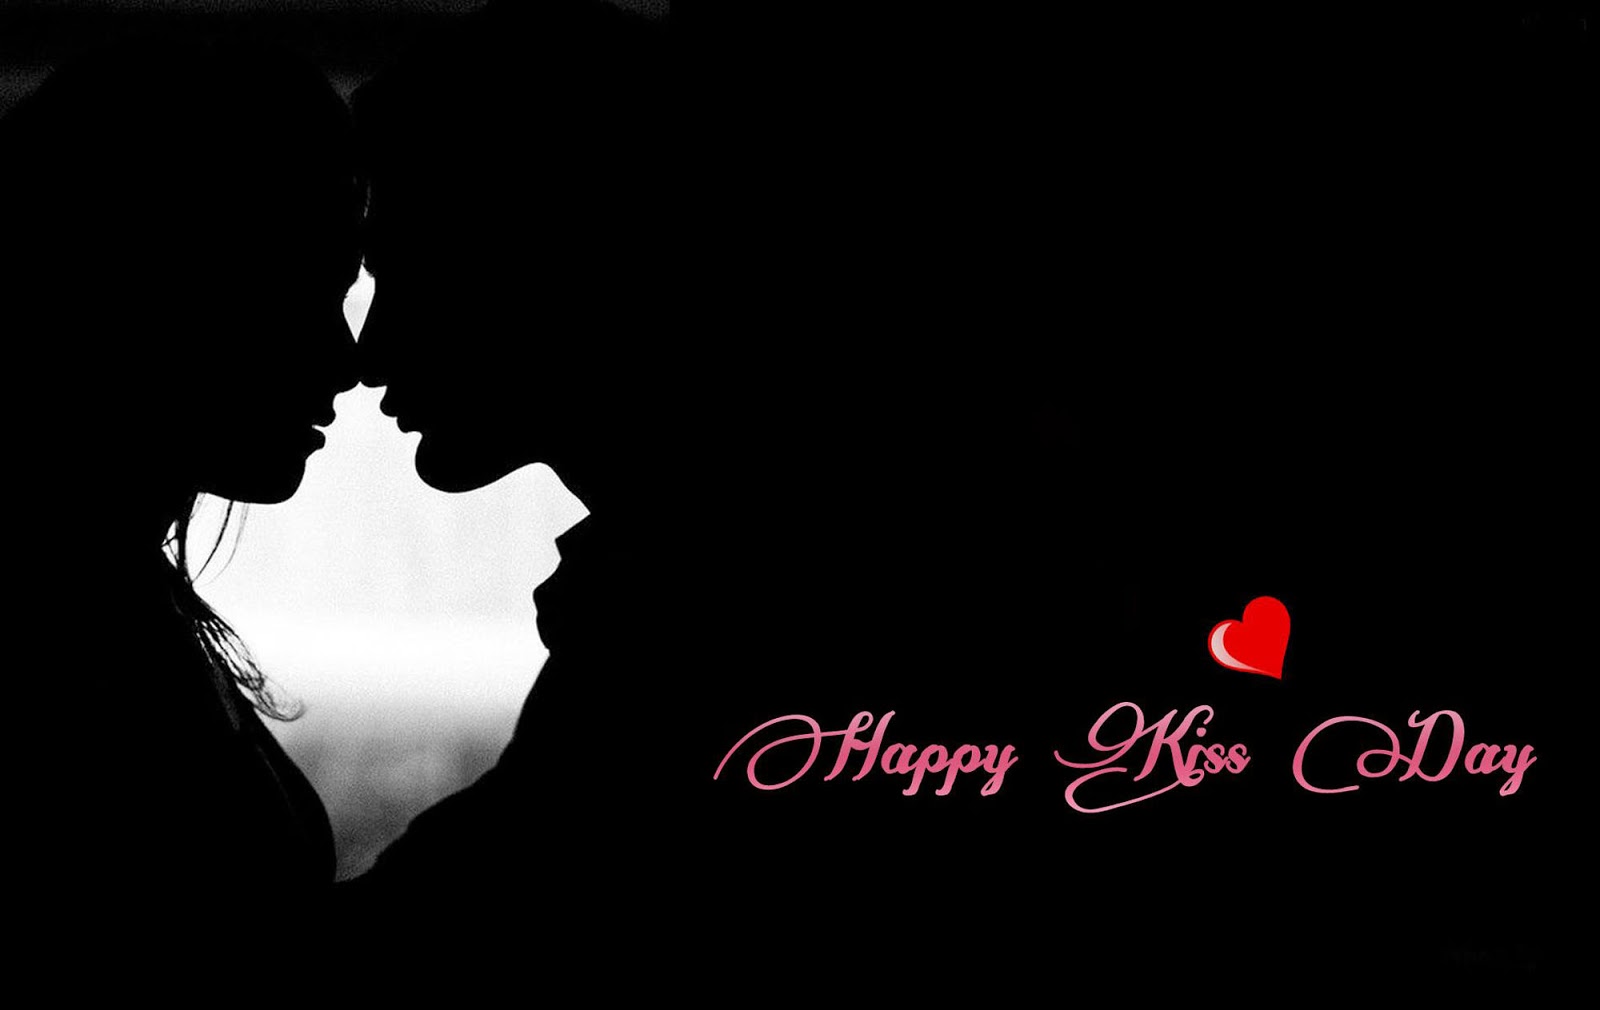 Happy Kiss Day couple wallpaper